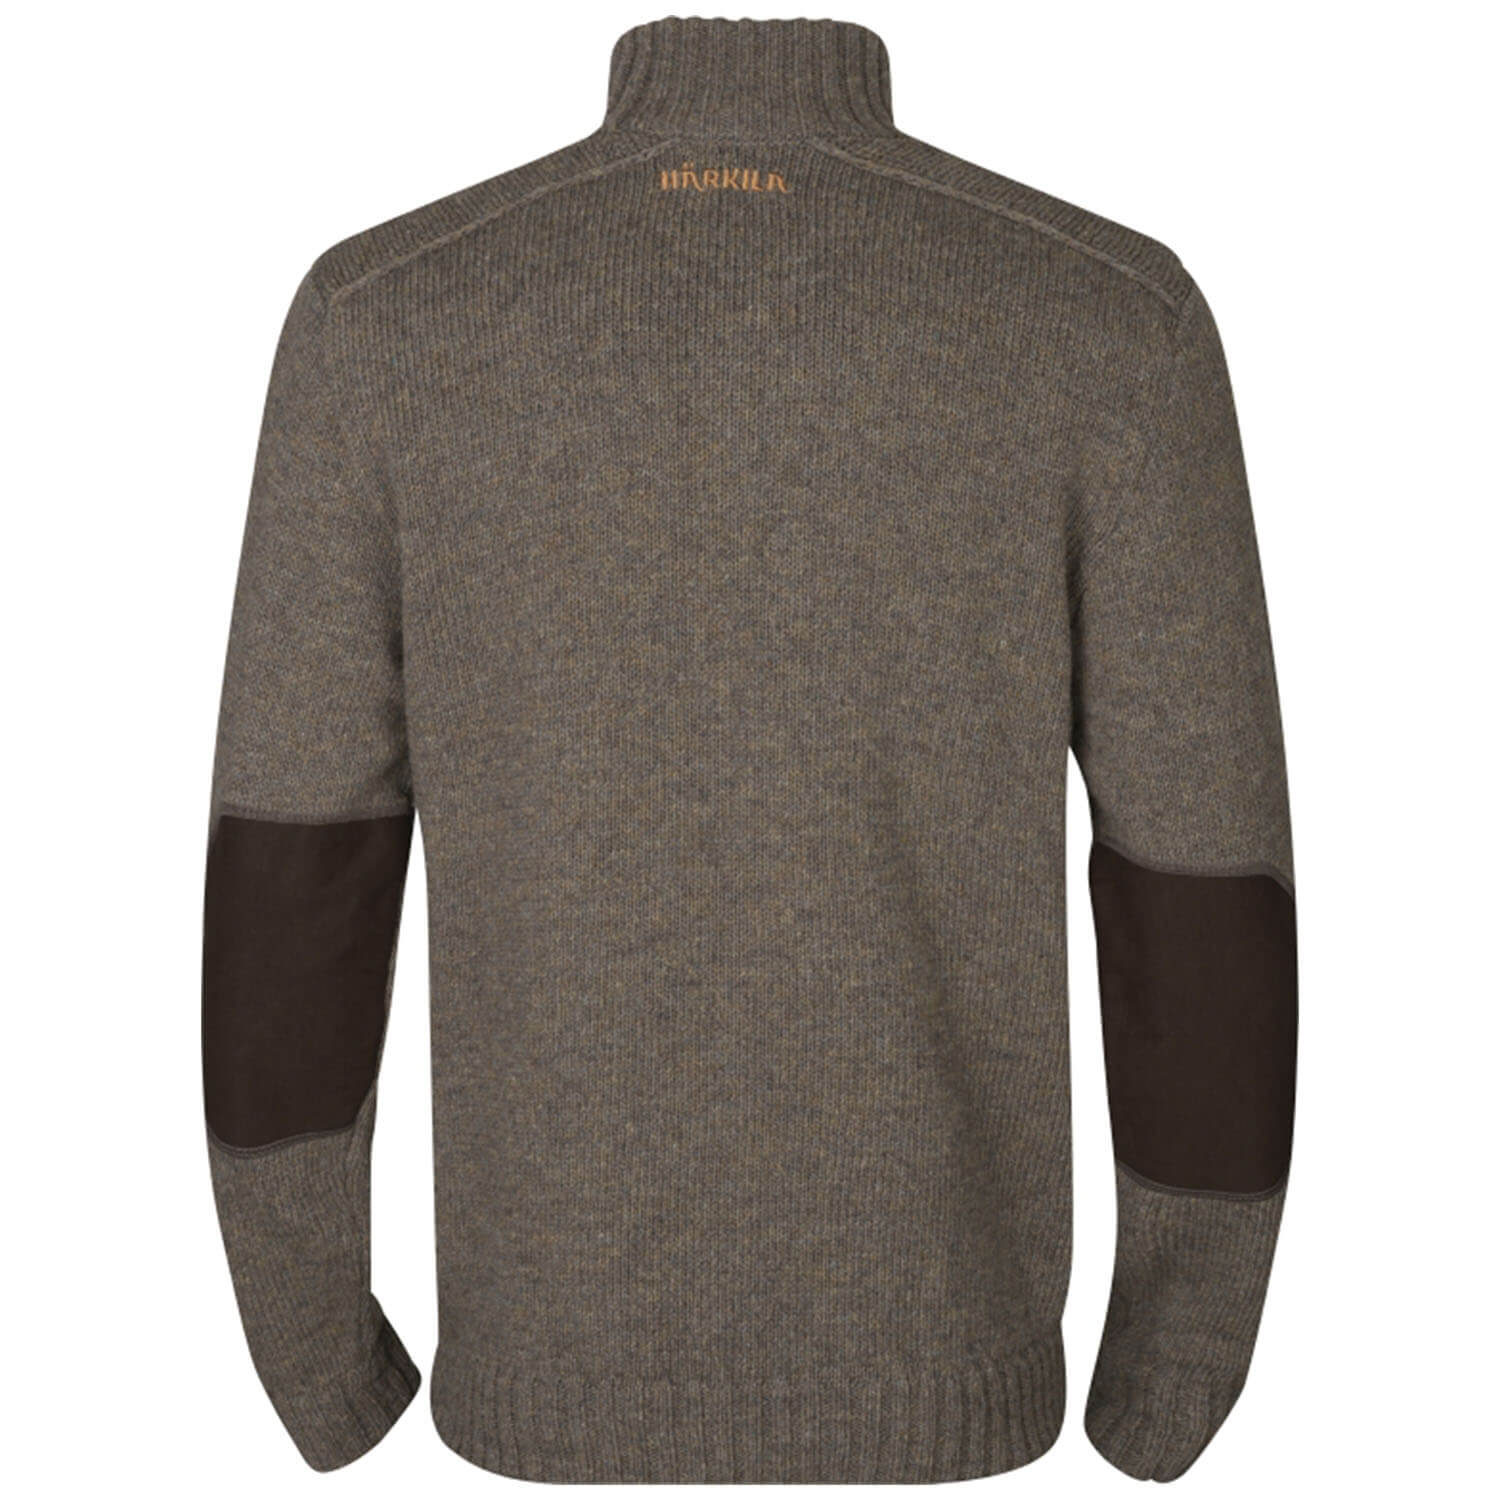 Härkila sweater annaboda 2.0 HSP (dark sand)